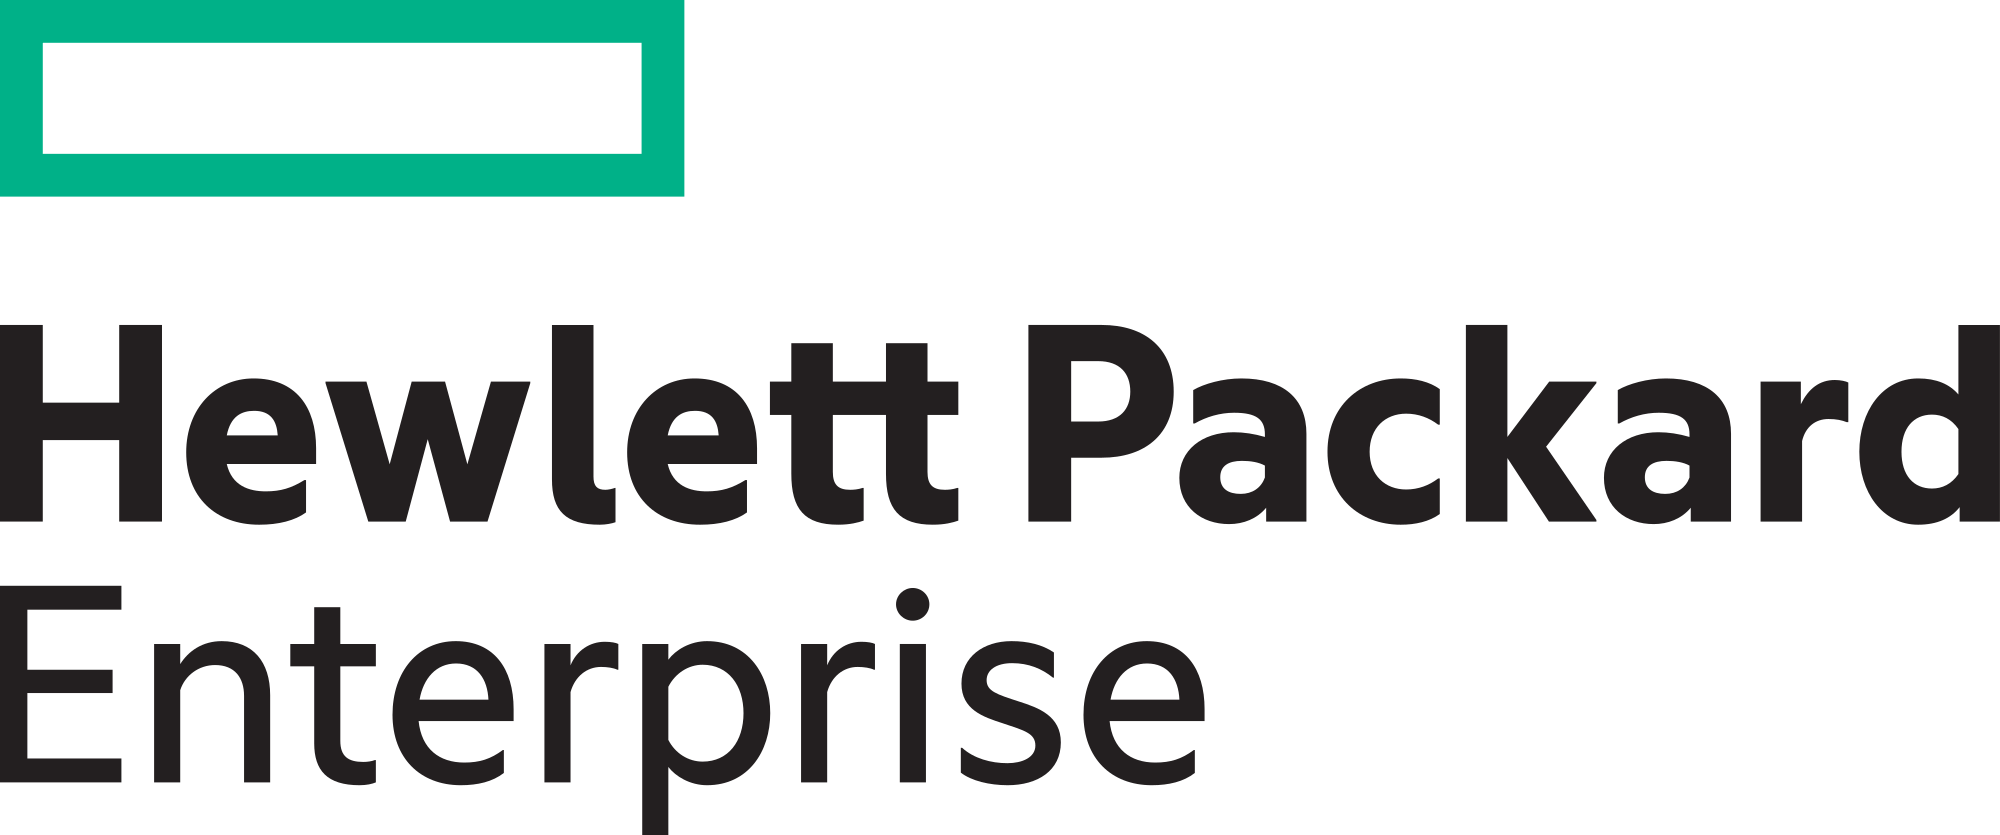 Hewlett-Packard Enterprise Logo - File:Hewlett Packard Enterprise logo.svg - Wikimedia Commons